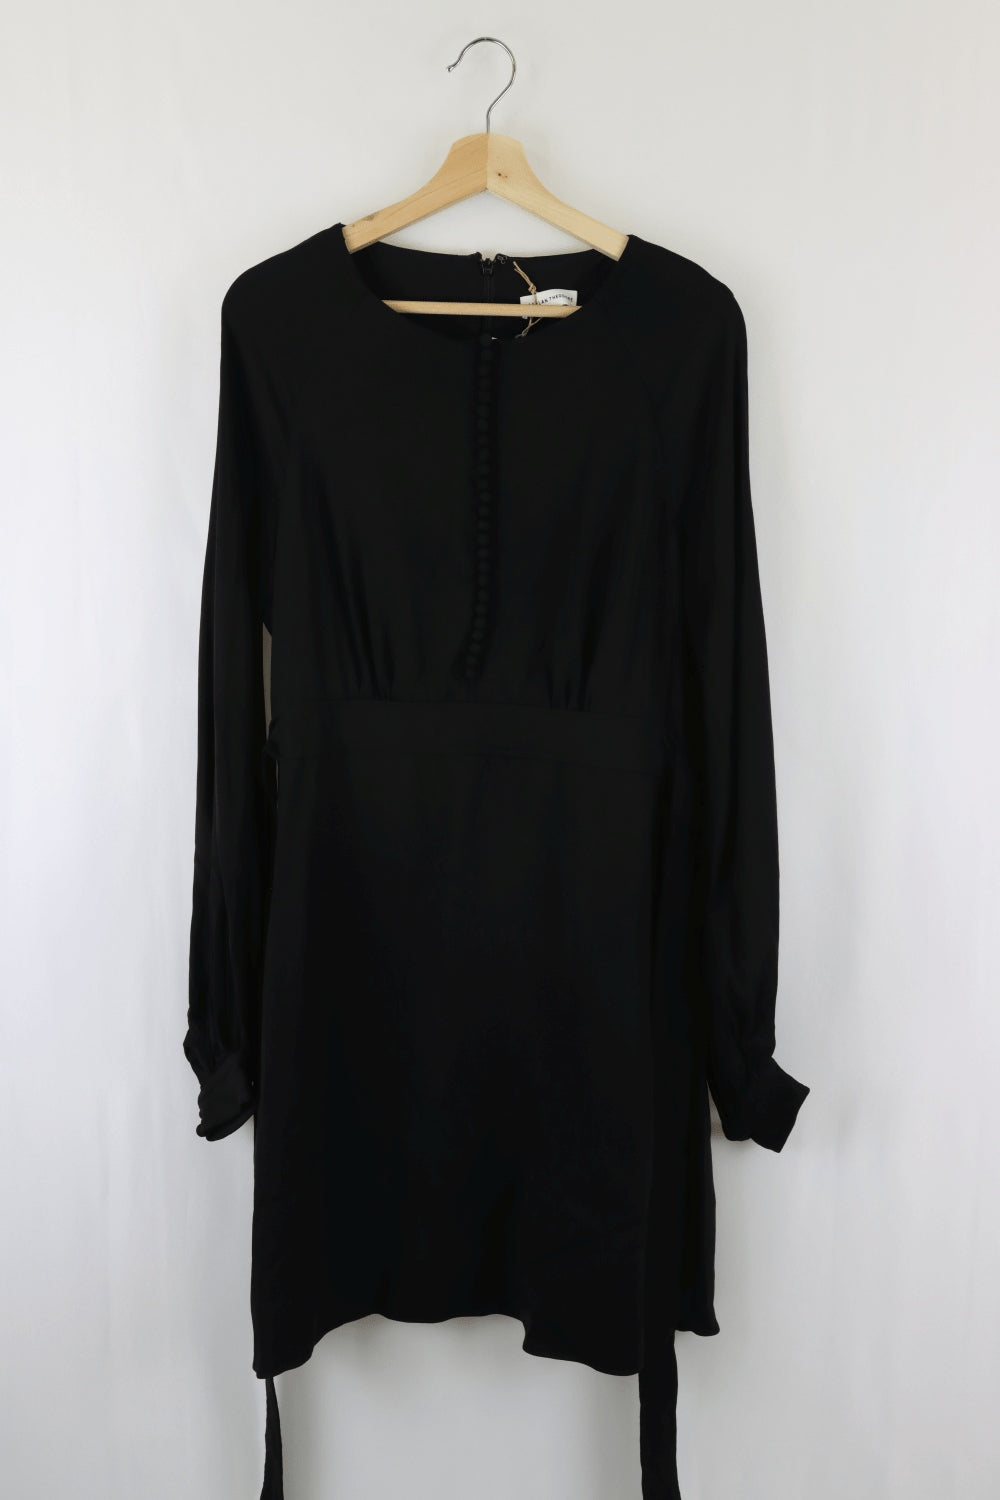 Scanlan Theodore Black Dress 10